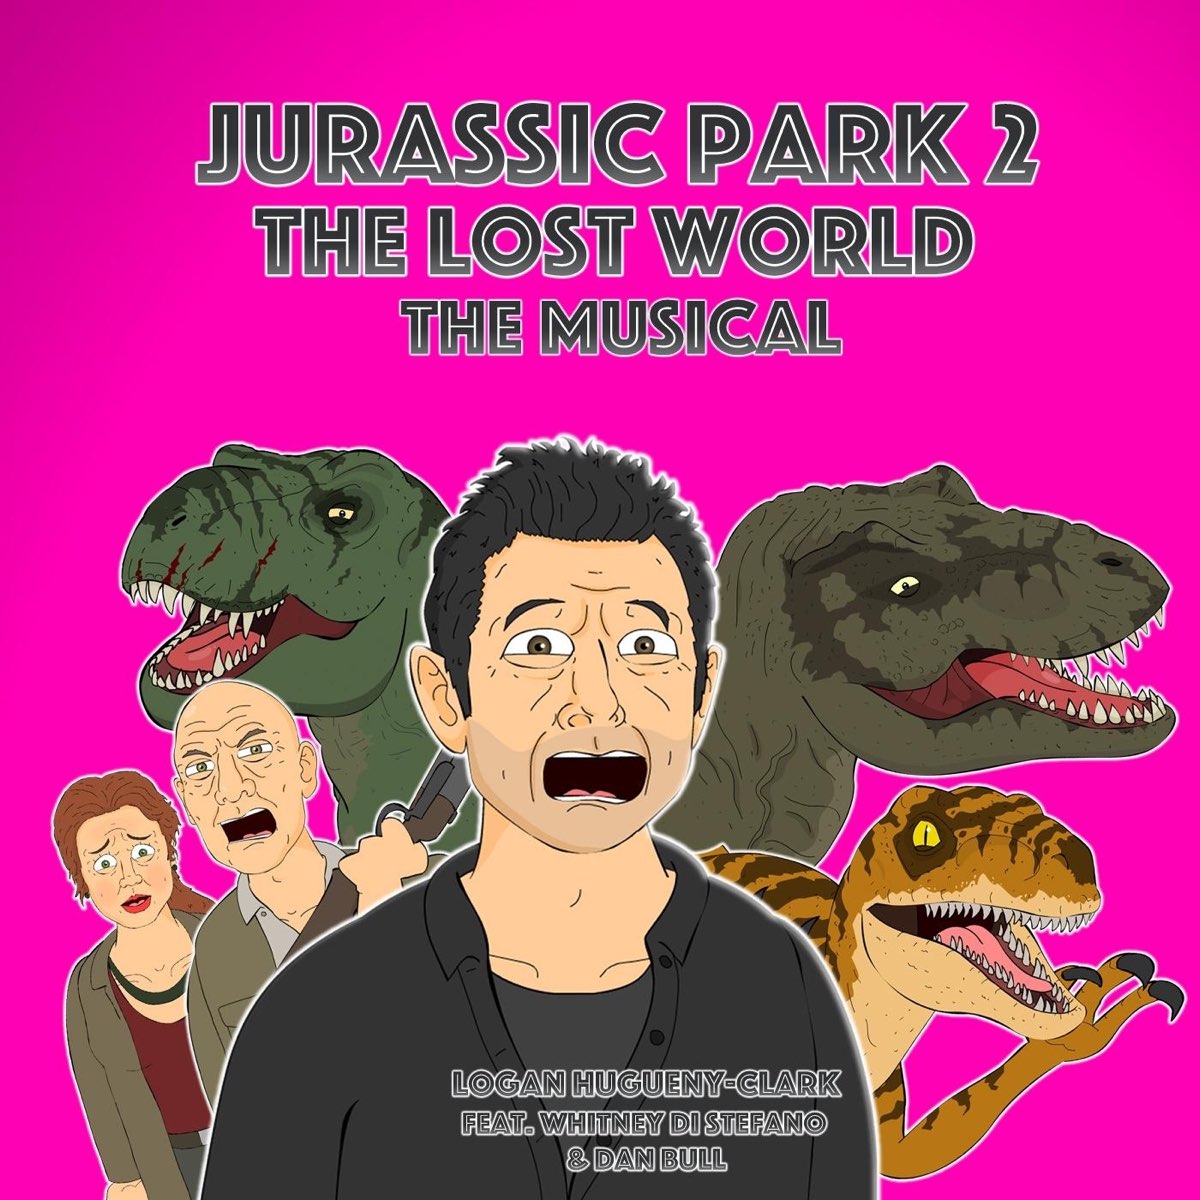 Жил динозавр песня. Jurassic Park 3: the Musical Logan Hugueny-Clark. Юрасик парк пародия. Песни про динозавров. Динозавр музыкальный.